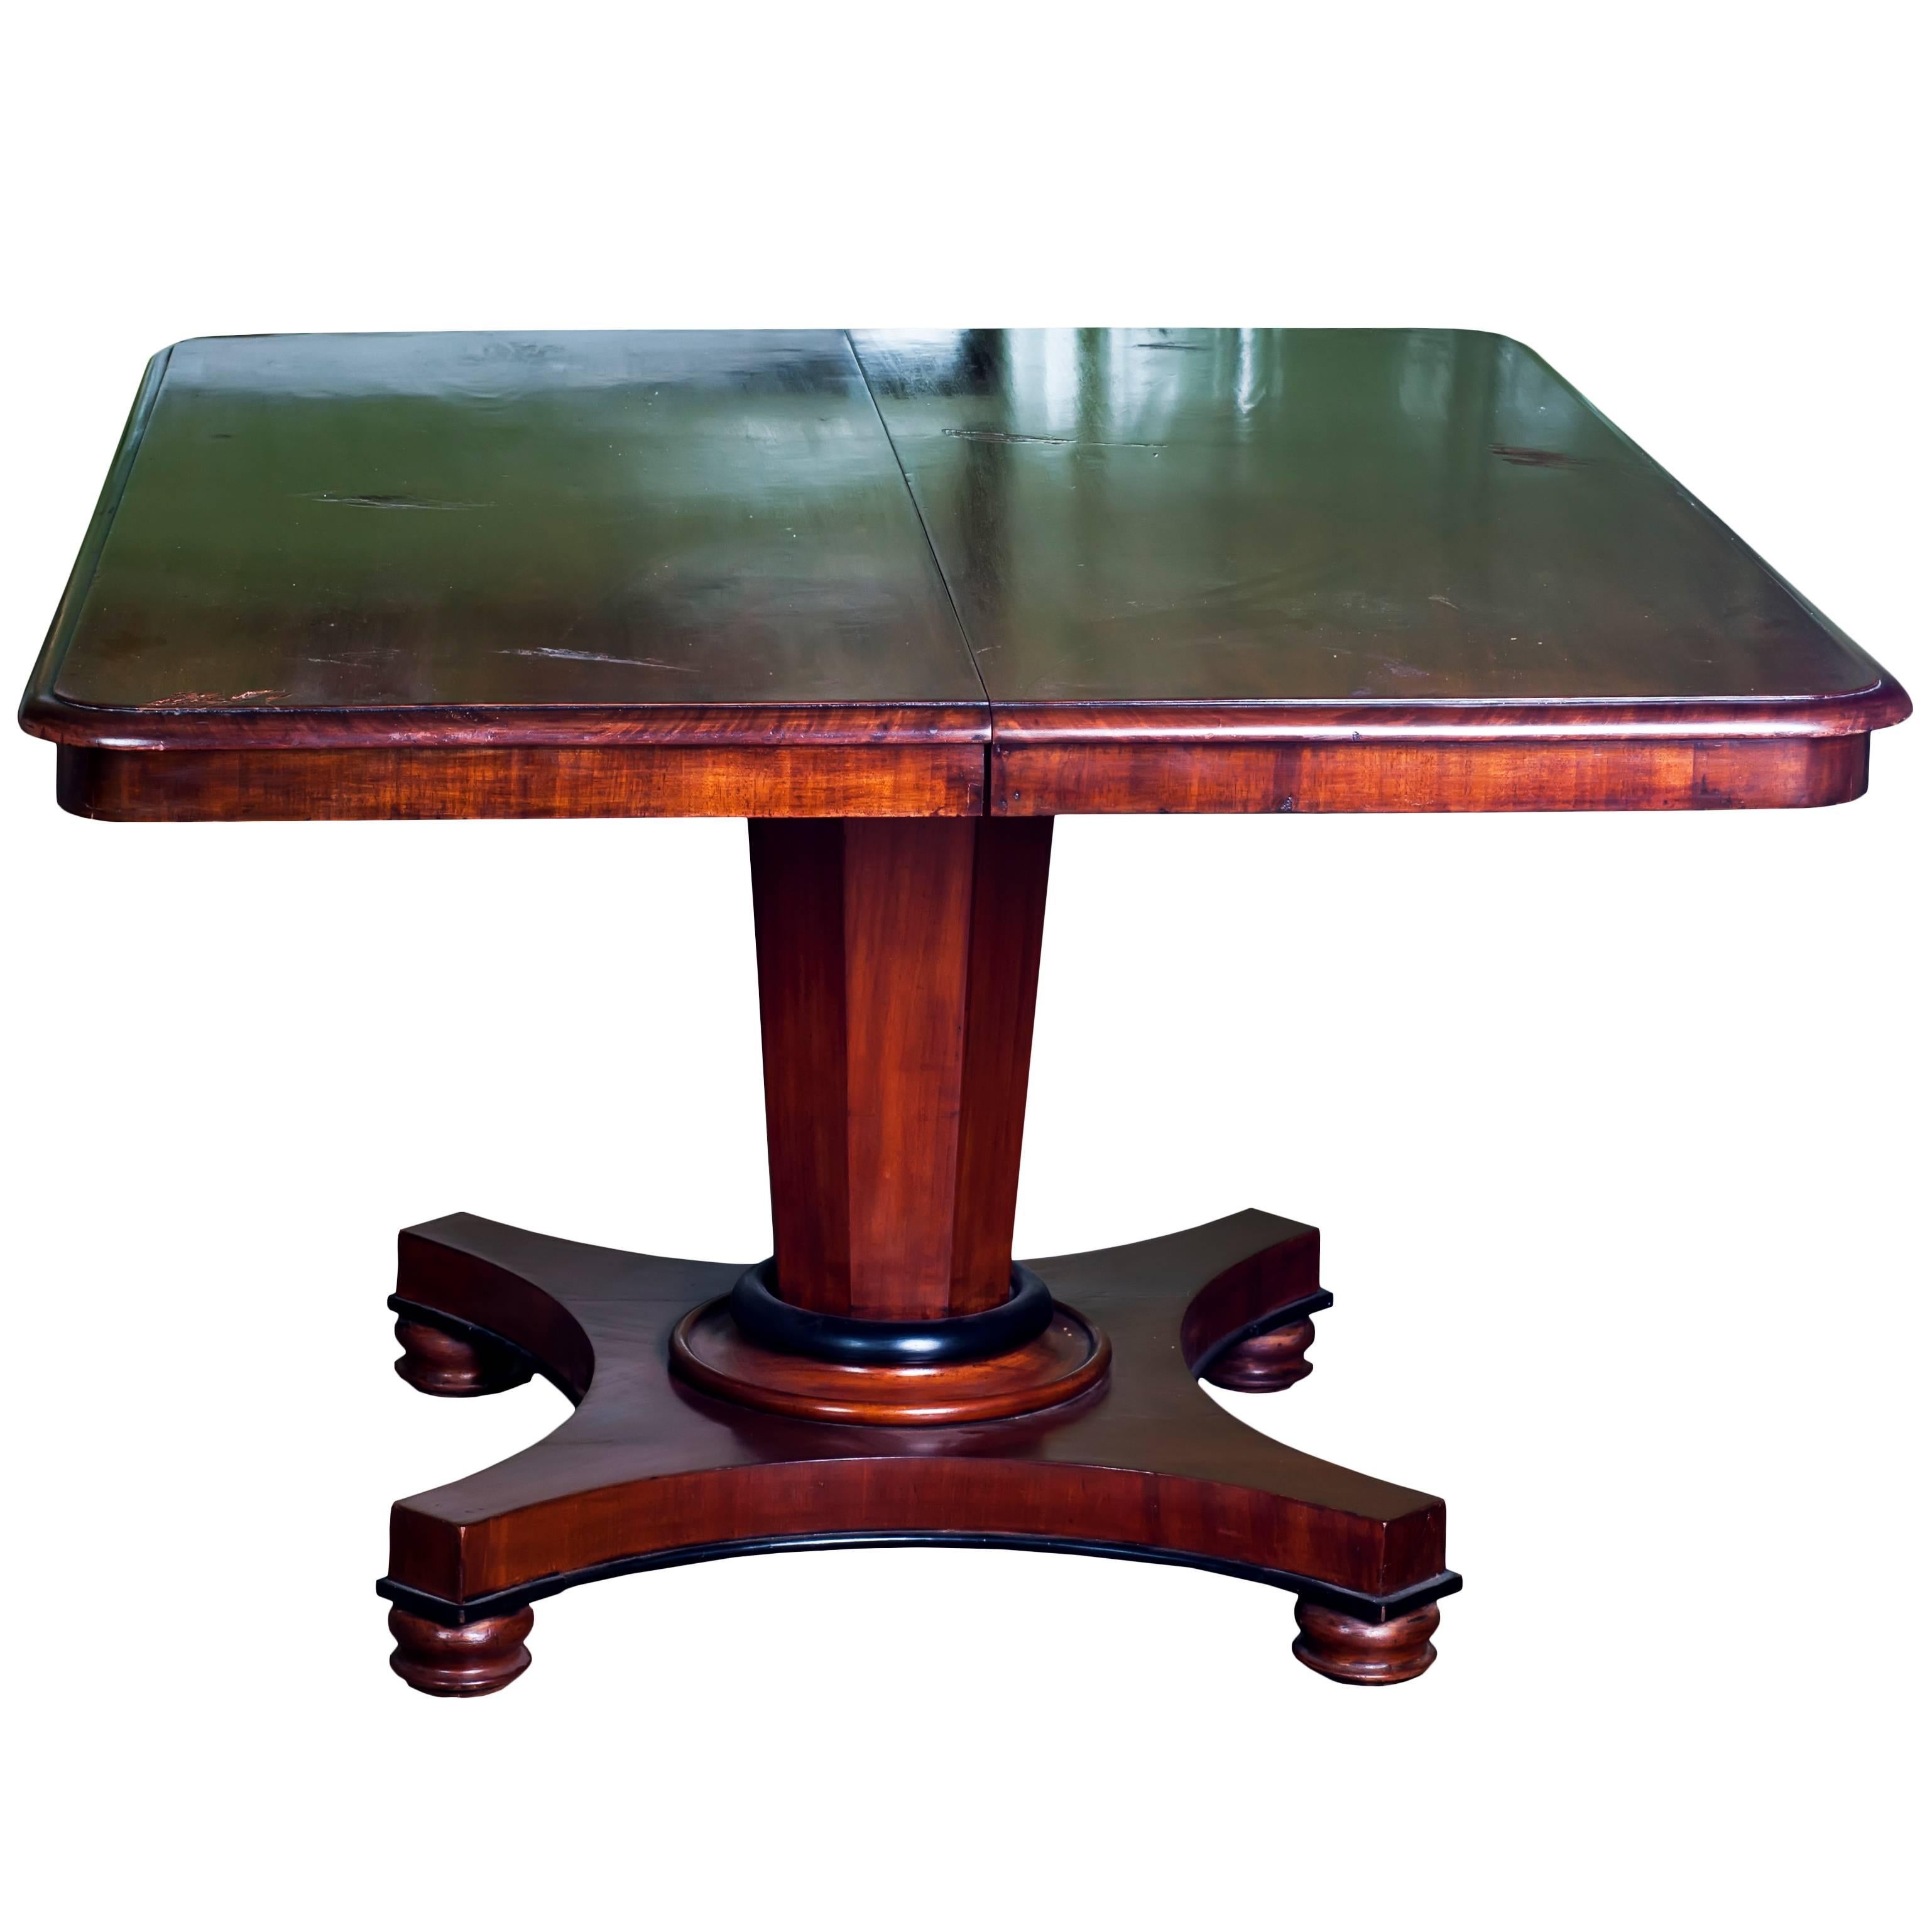 Antique Regency Pedestal Dining Table with One Leaf For Sale